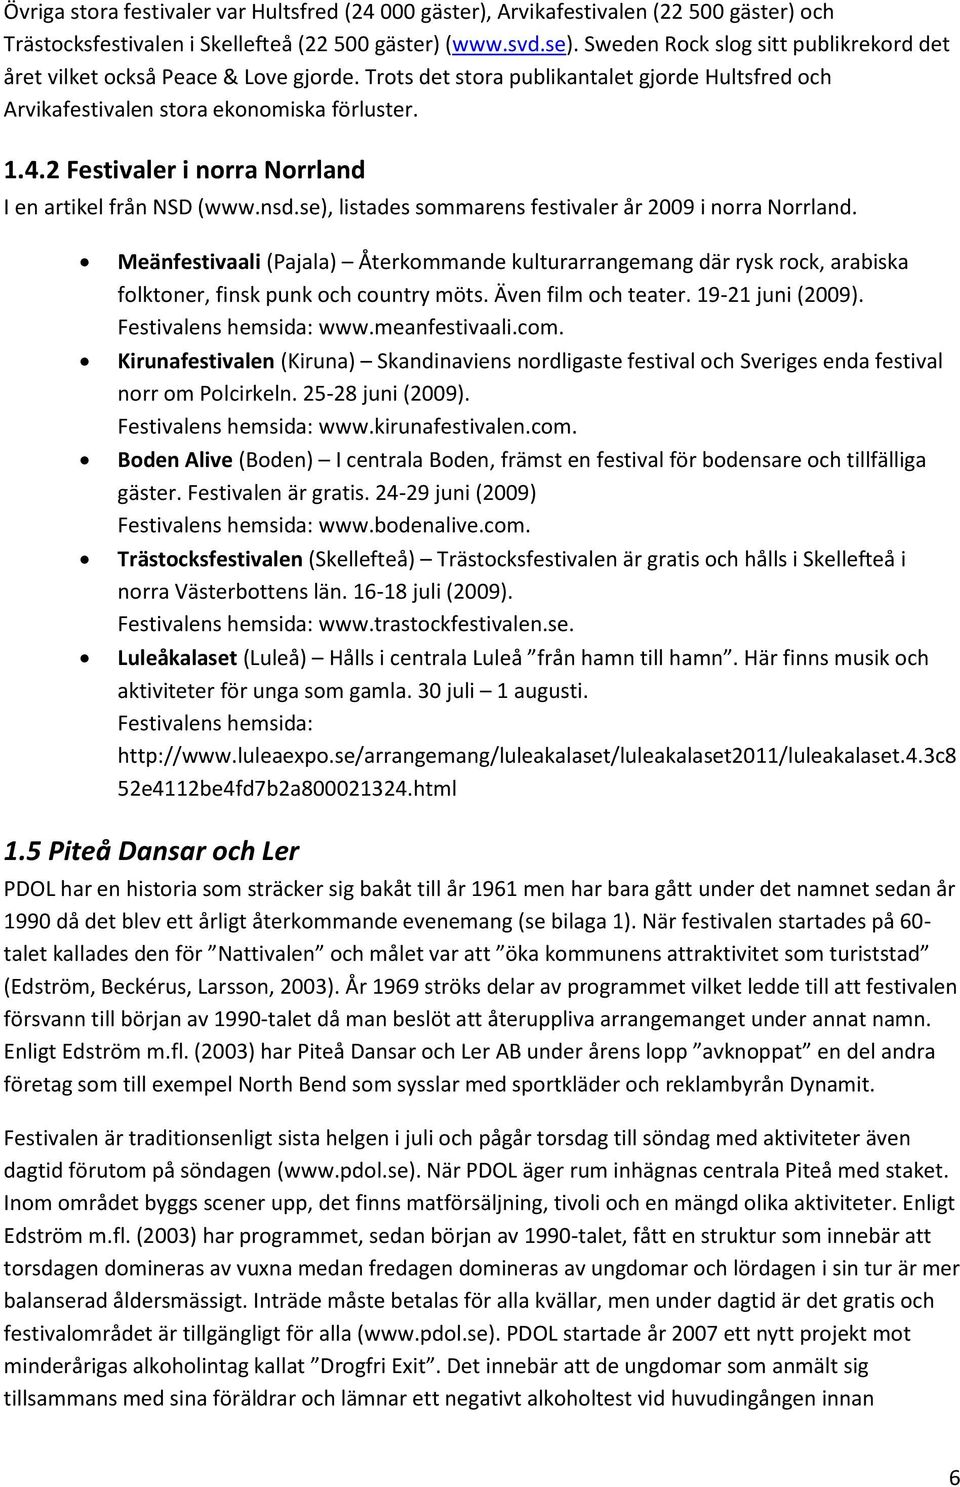 2 Festivaler i norra Norrland I en artikel från NSD (www.nsd.se), listades sommarens festivaler år 2009 i norra Norrland.